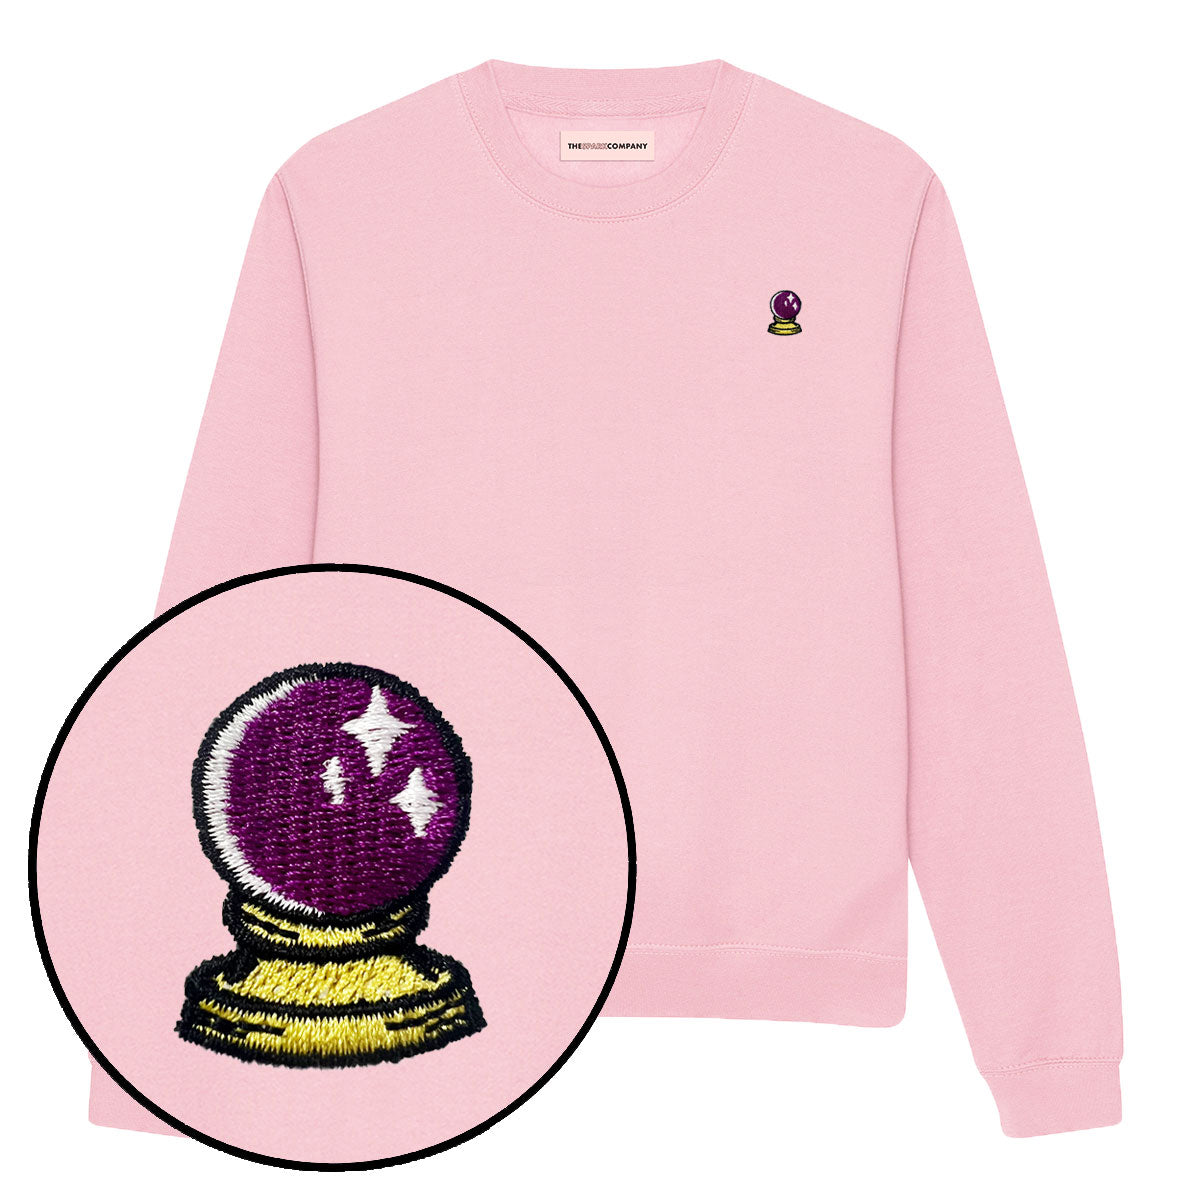 Crystal Ball Embroidery Detail Sweatshirt